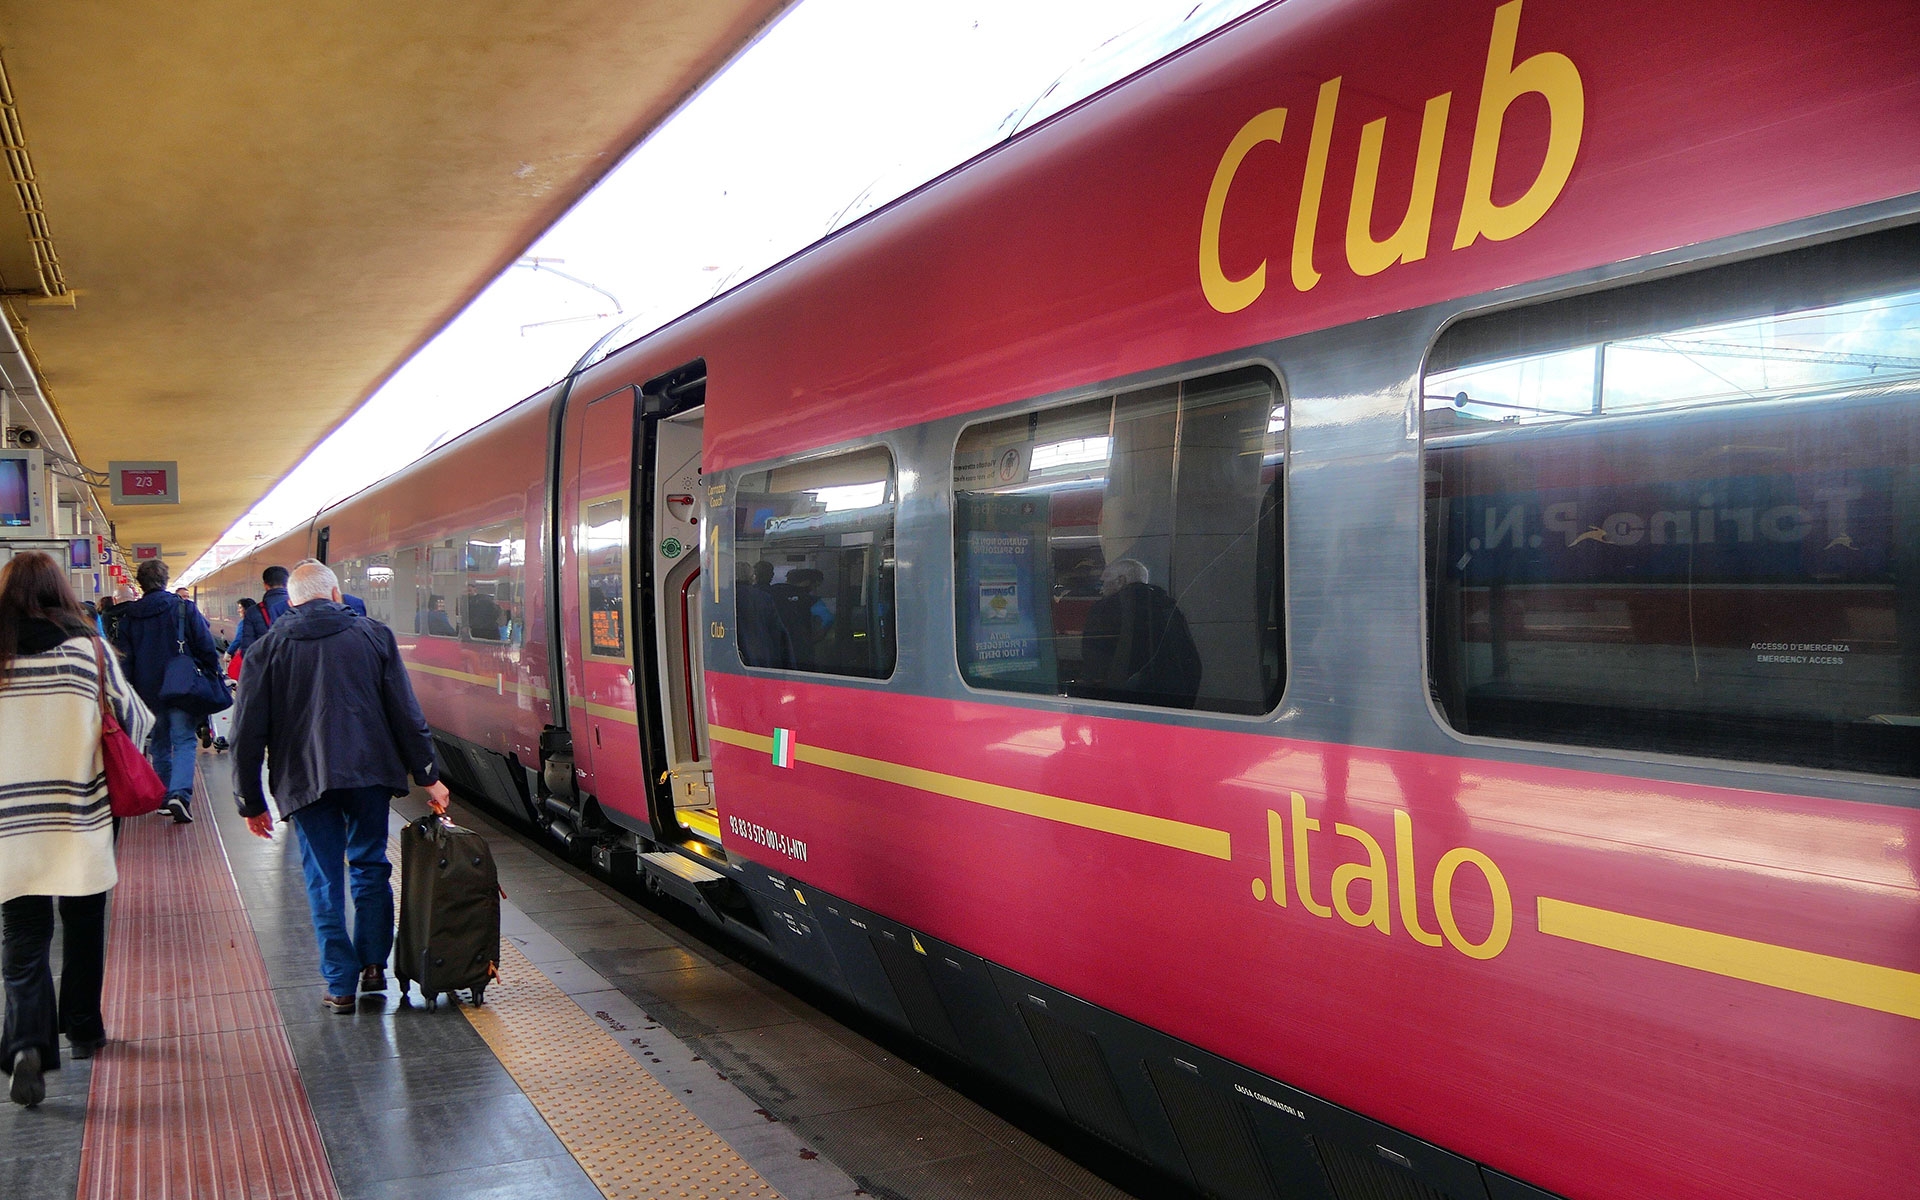 NTV Italo train at Turin station (photo © Antonello Marangi / dreamstime.com).